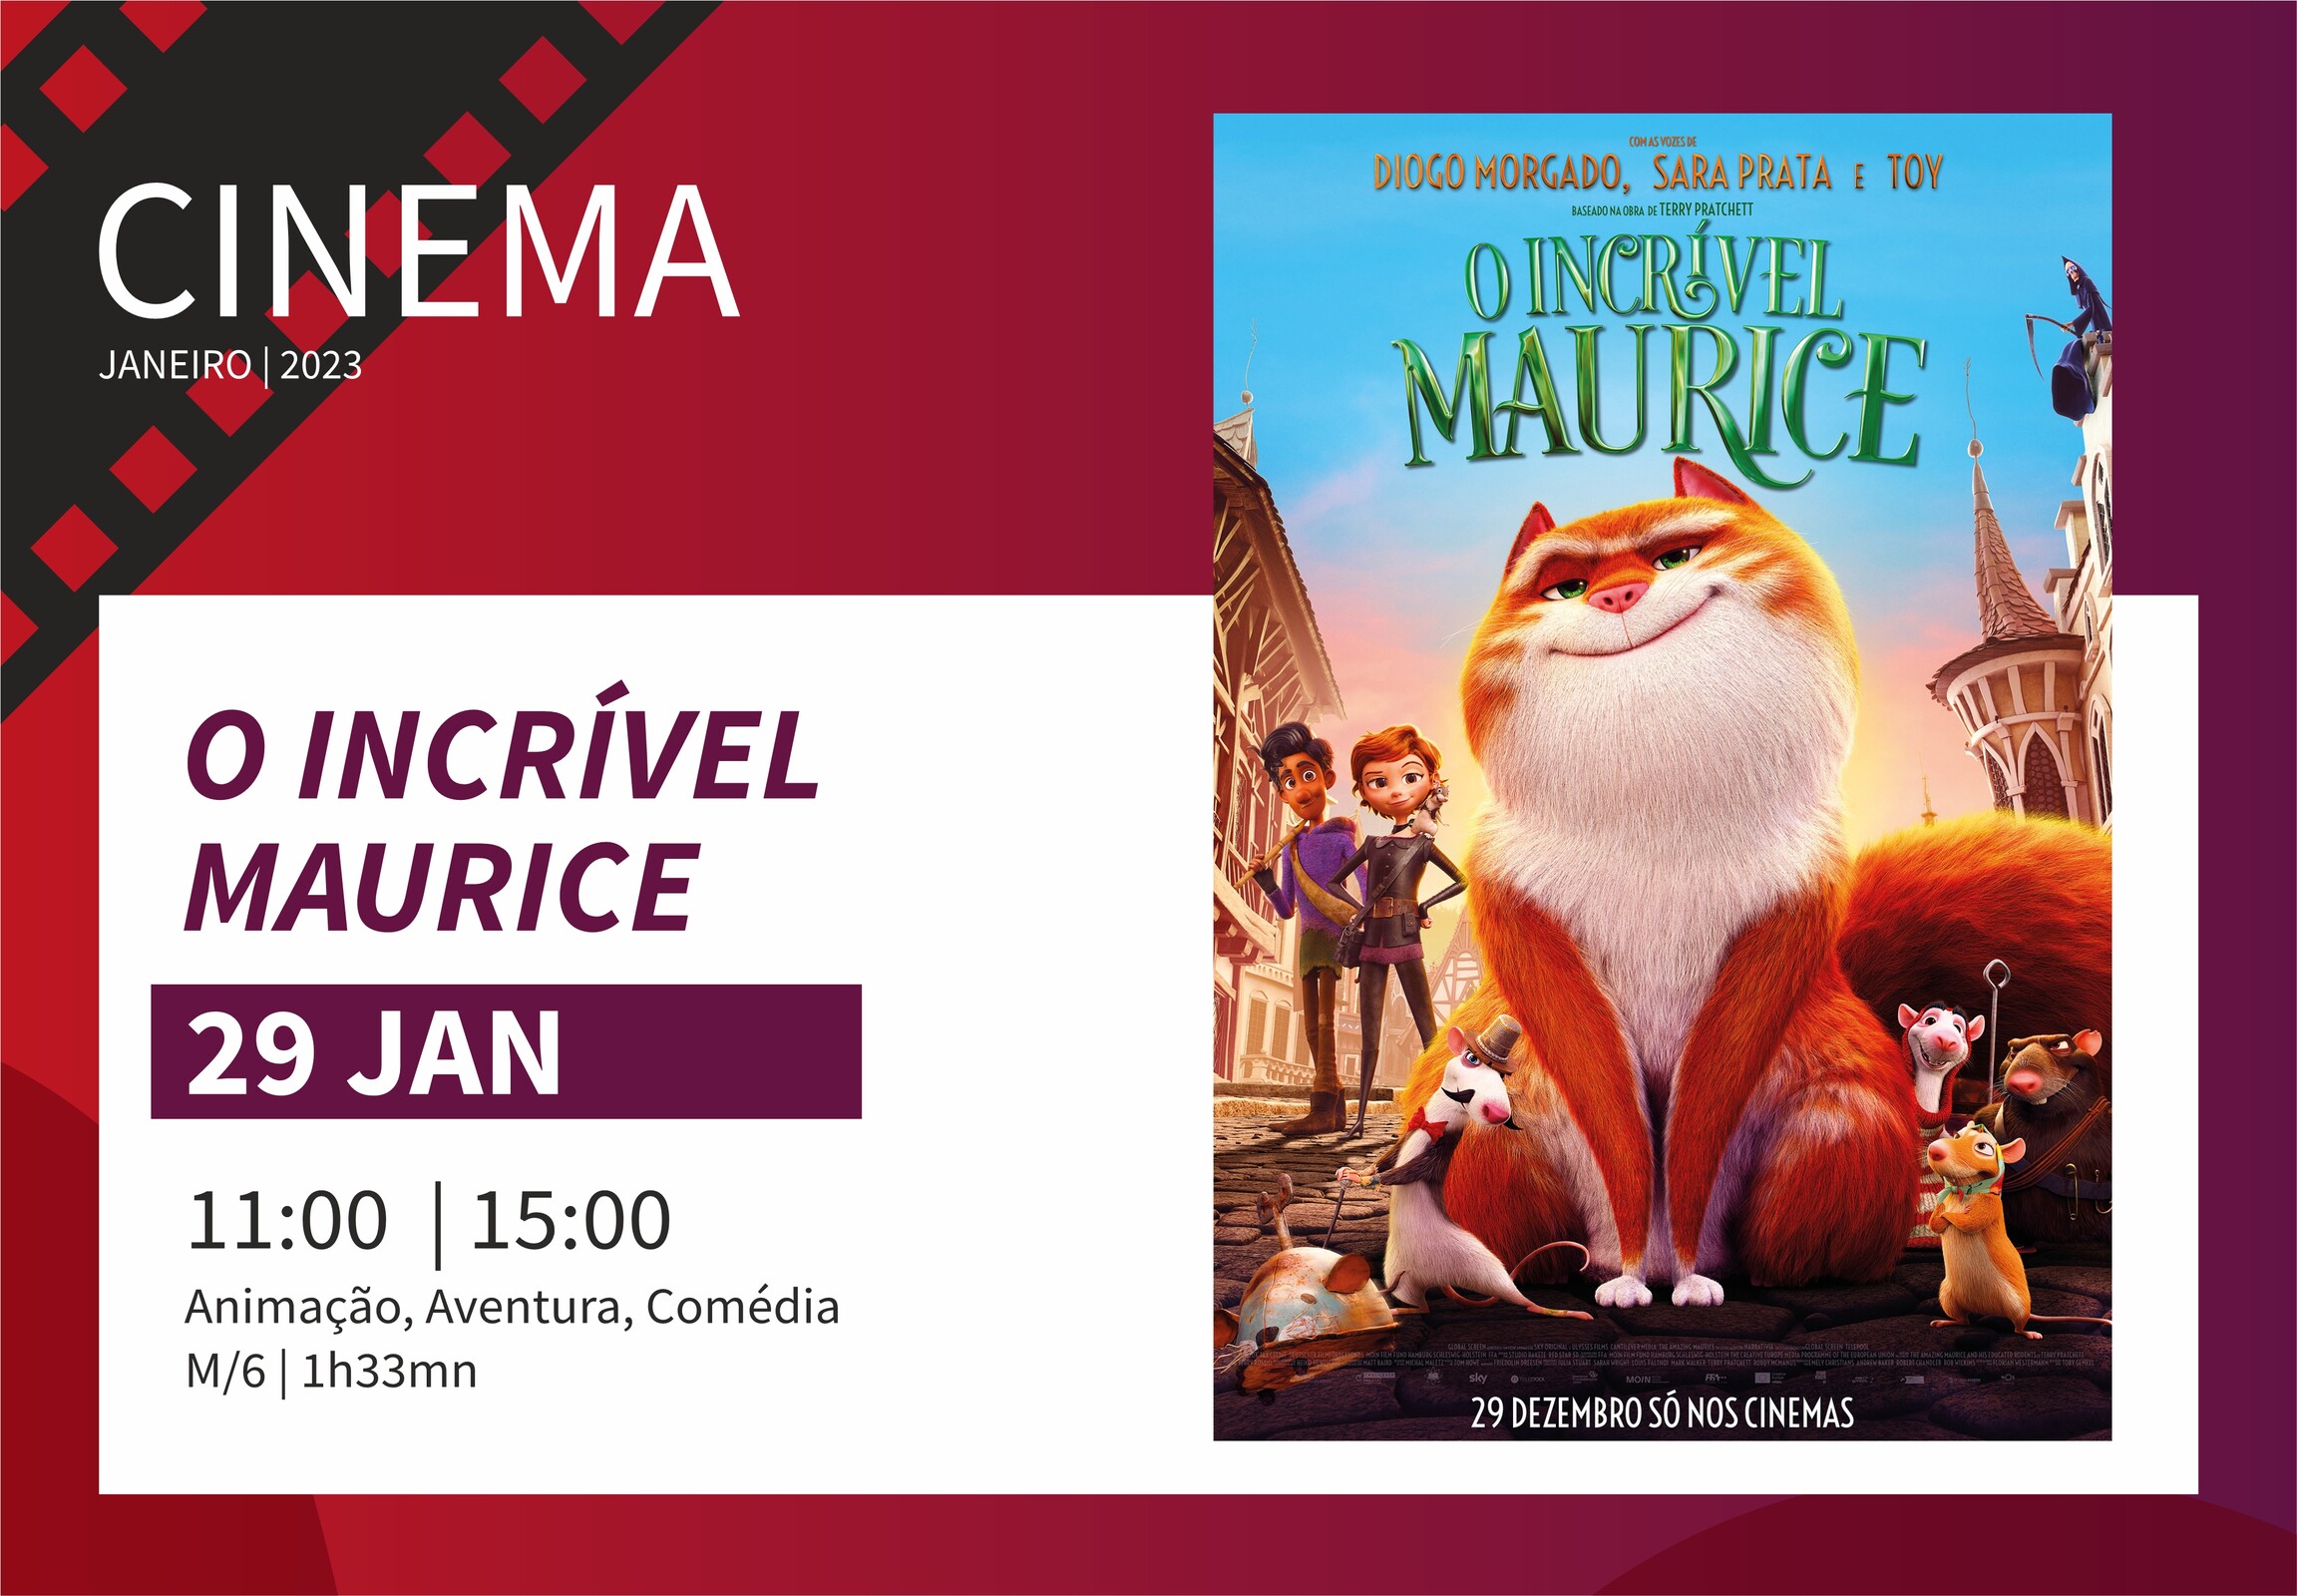 Cinema O Incrivel Maurice